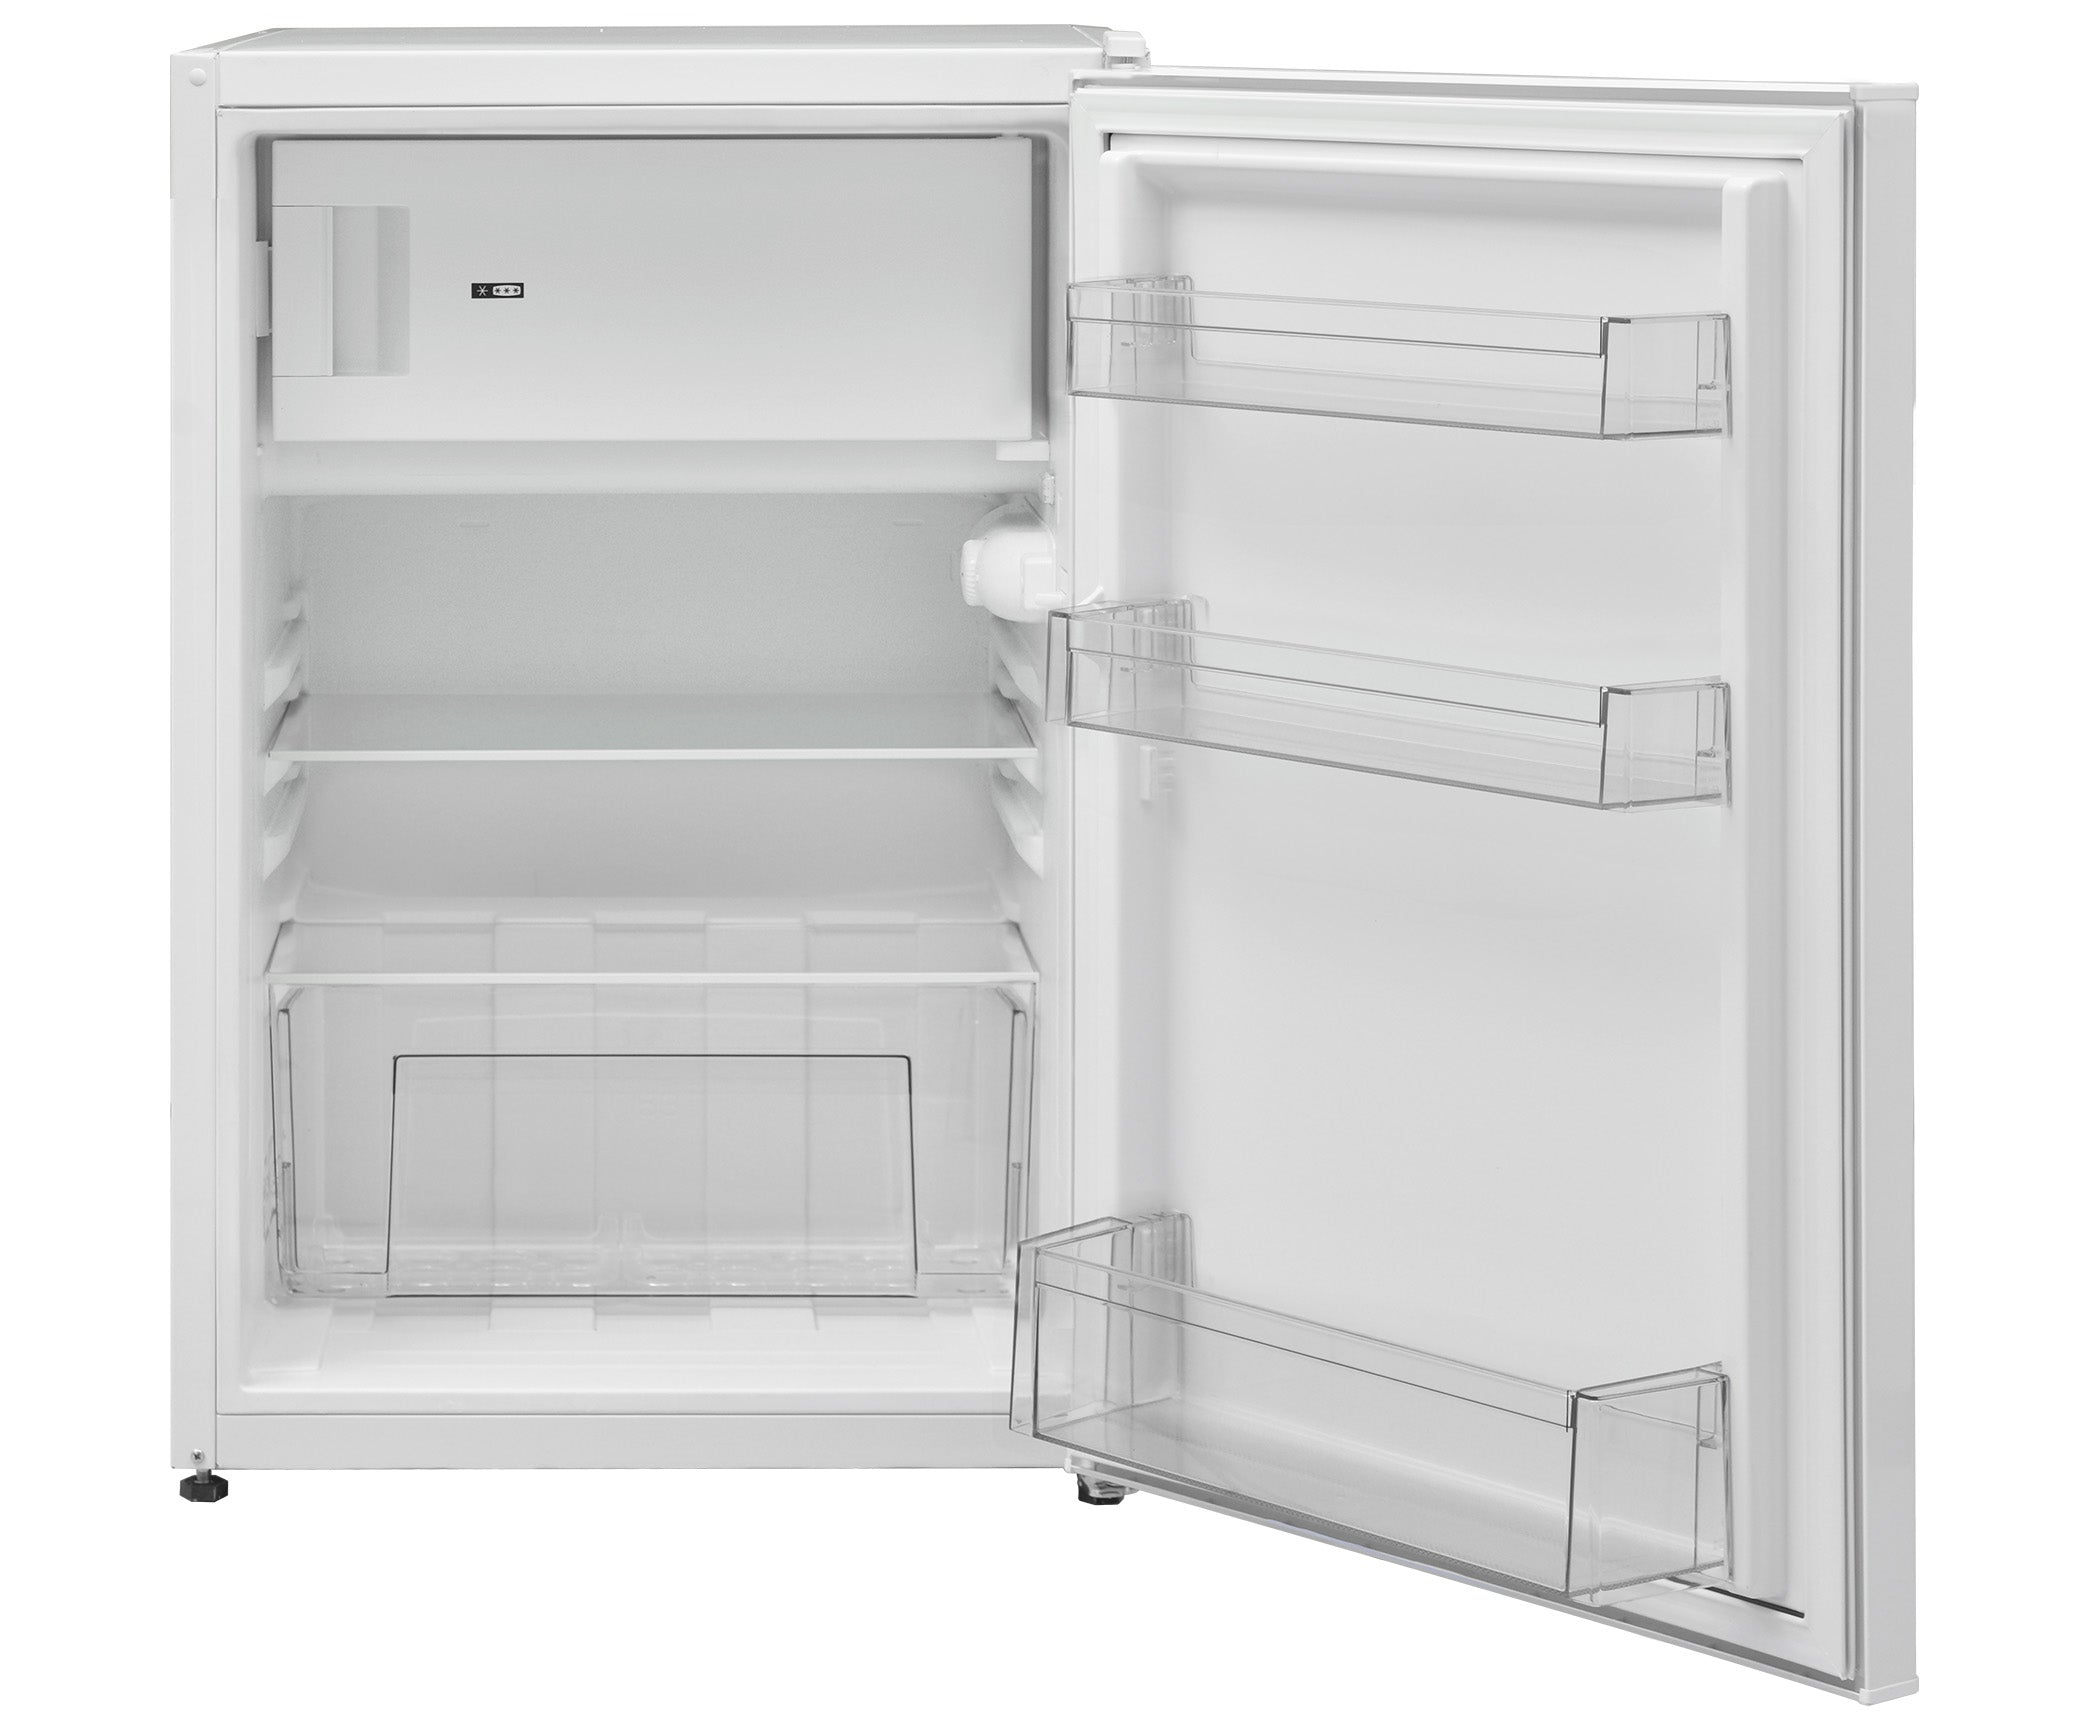 Vestel Single Door Refrigerator | Color White | Best Home Appliances & electronics in Bahrain | Halabh